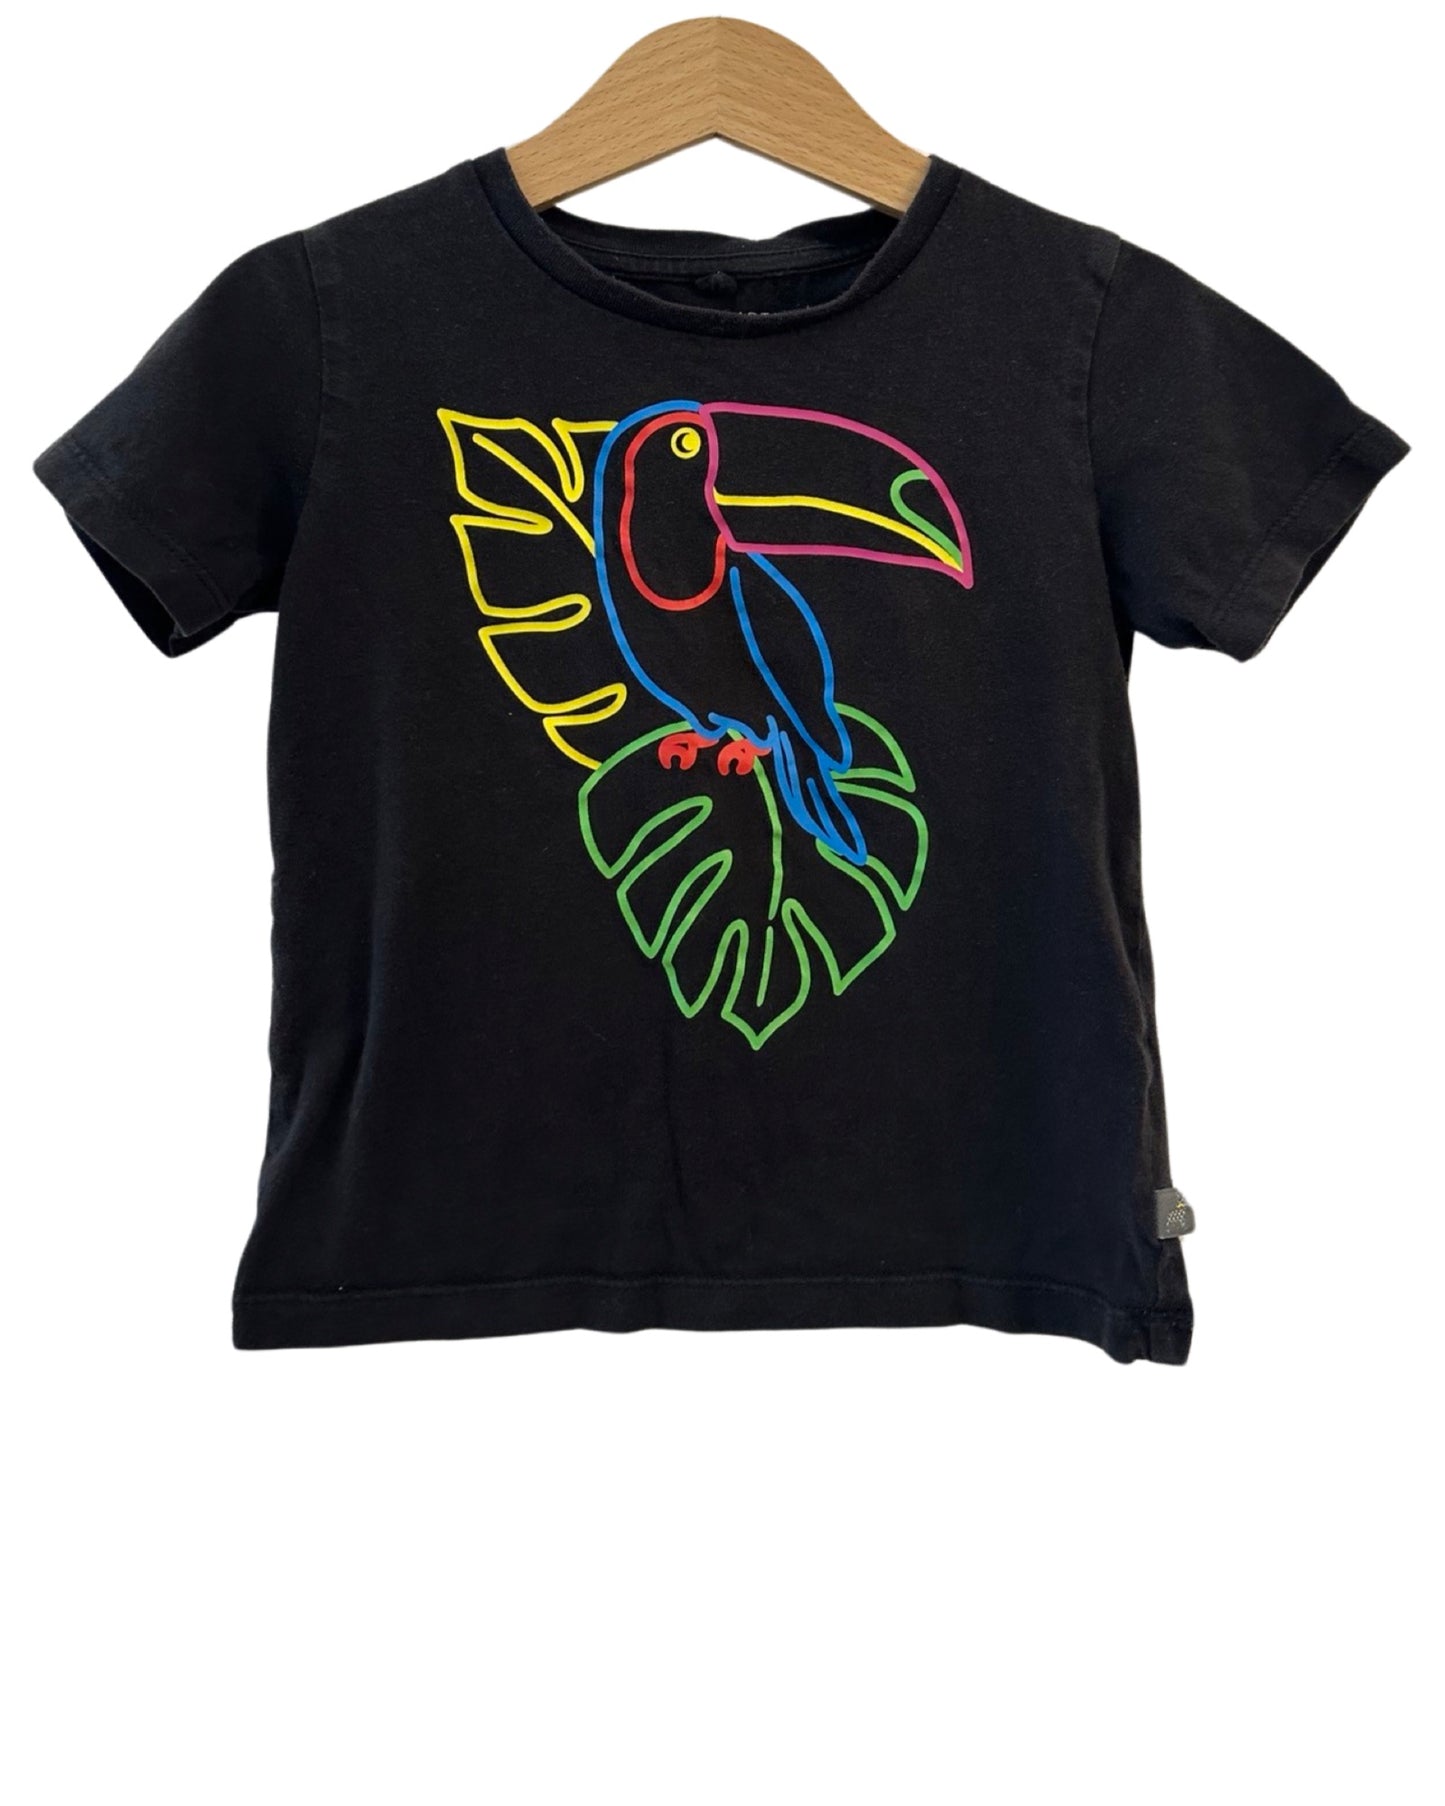 Stella McCartney parrot t shirt (3-4yrs)